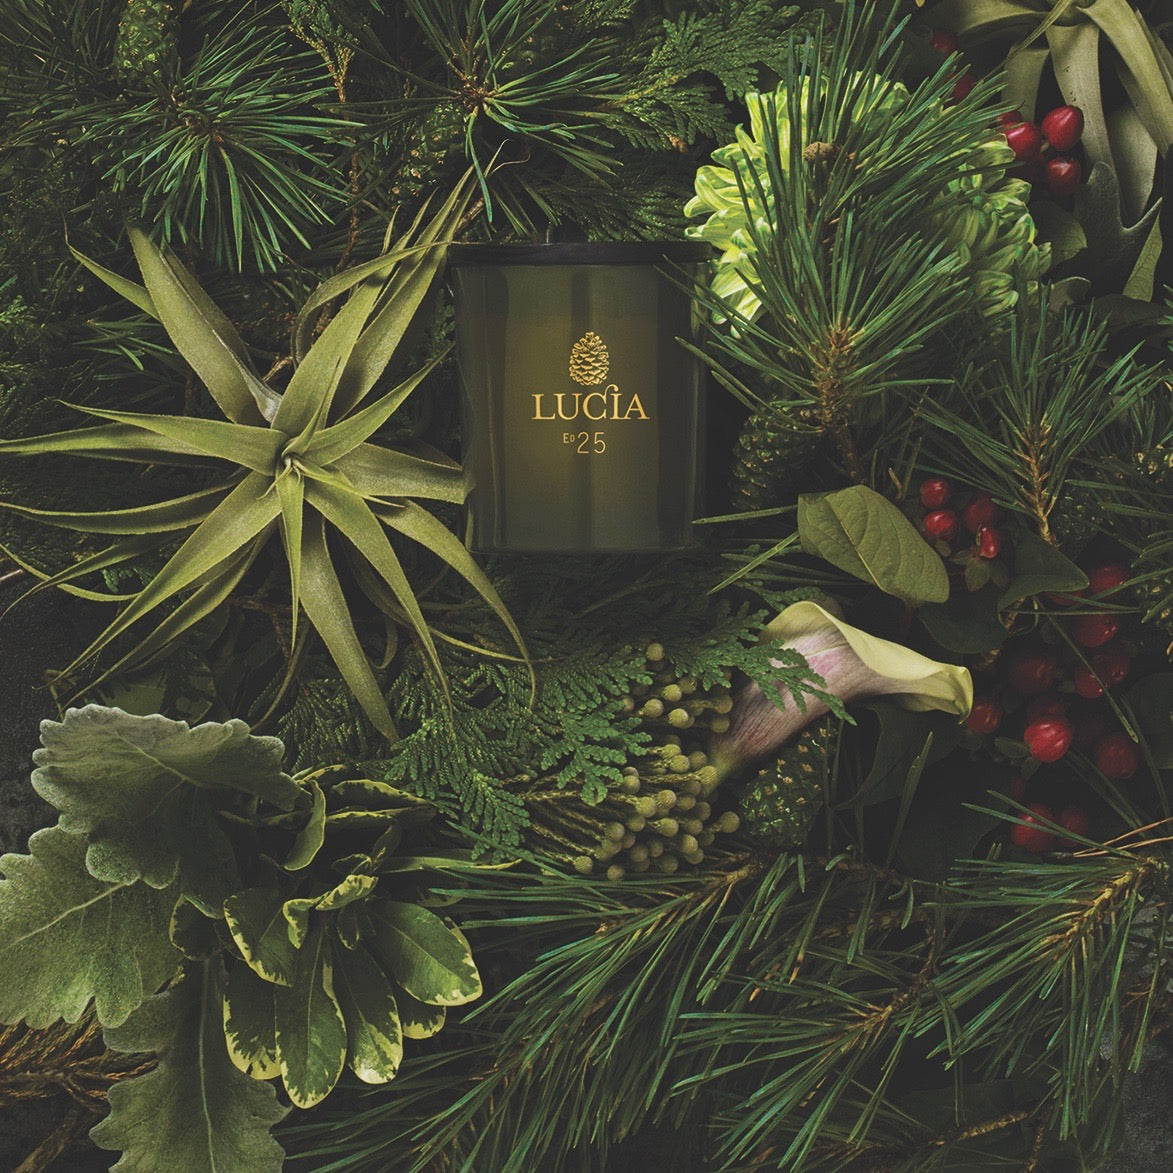 Lucia Les Saison Holiday Collection